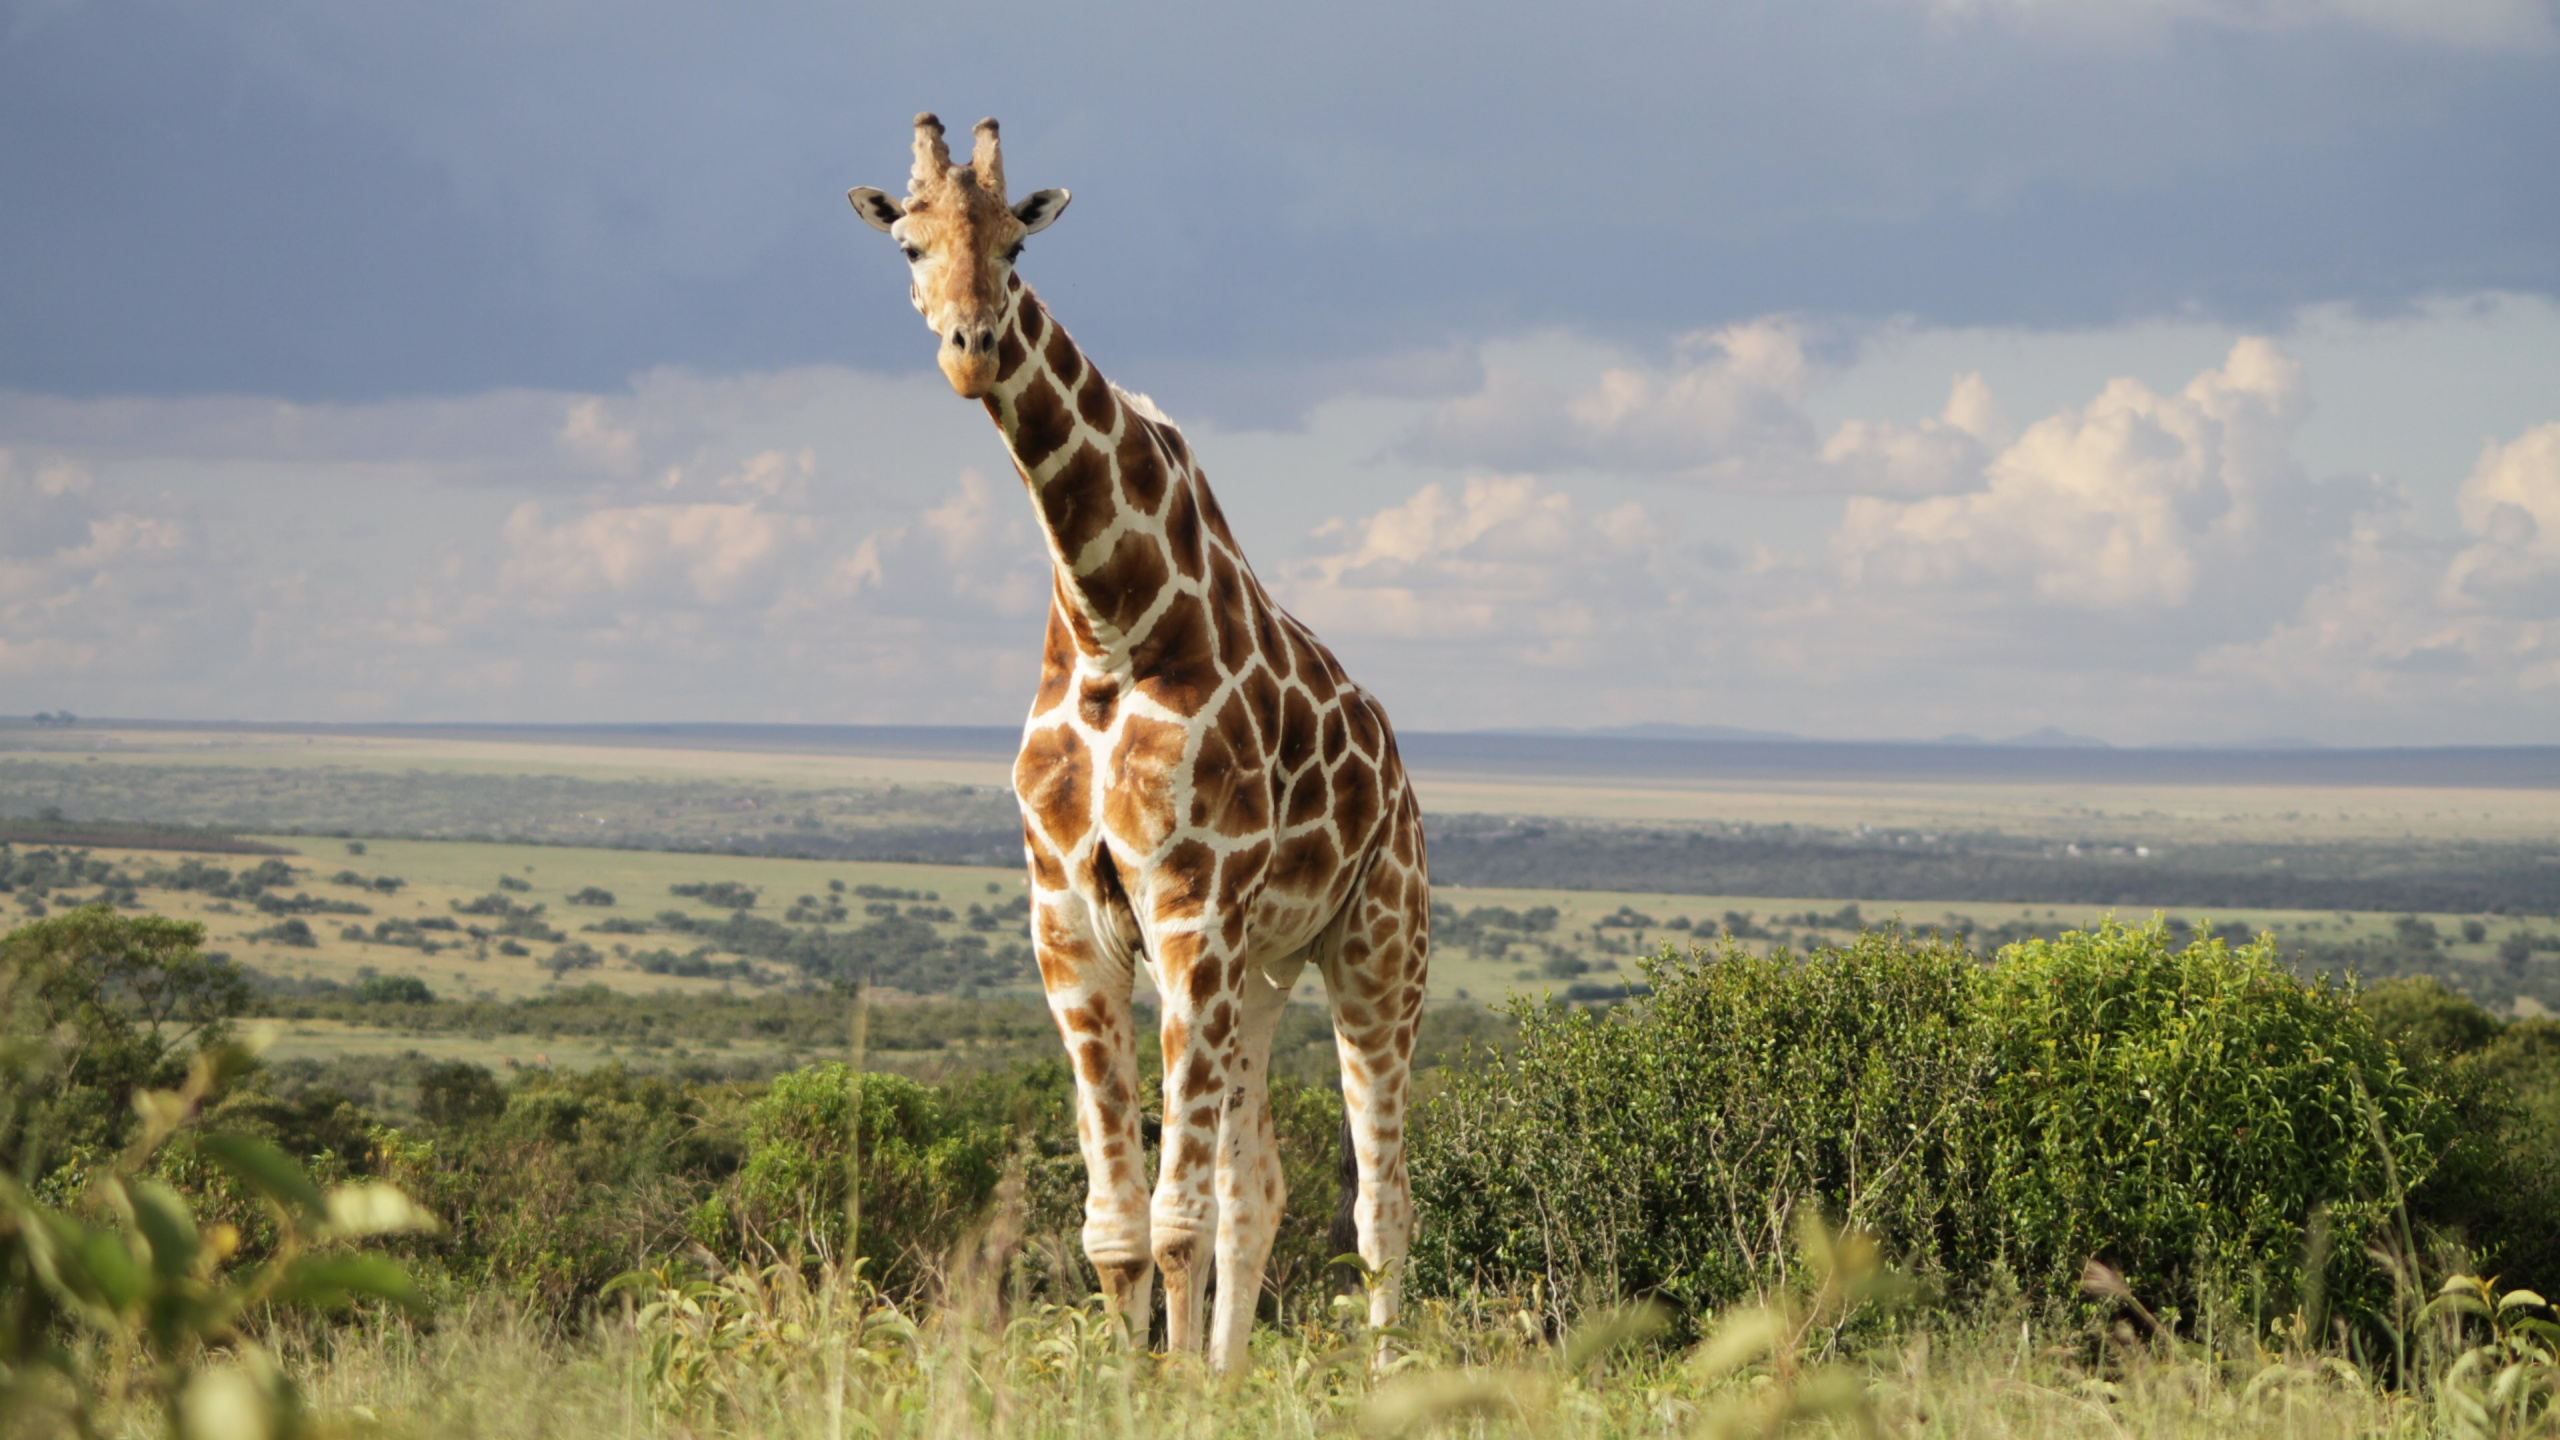 Giraffe Standing on Green Grass Field During Daytime. Wallpaper in 2560x1440 Resolution